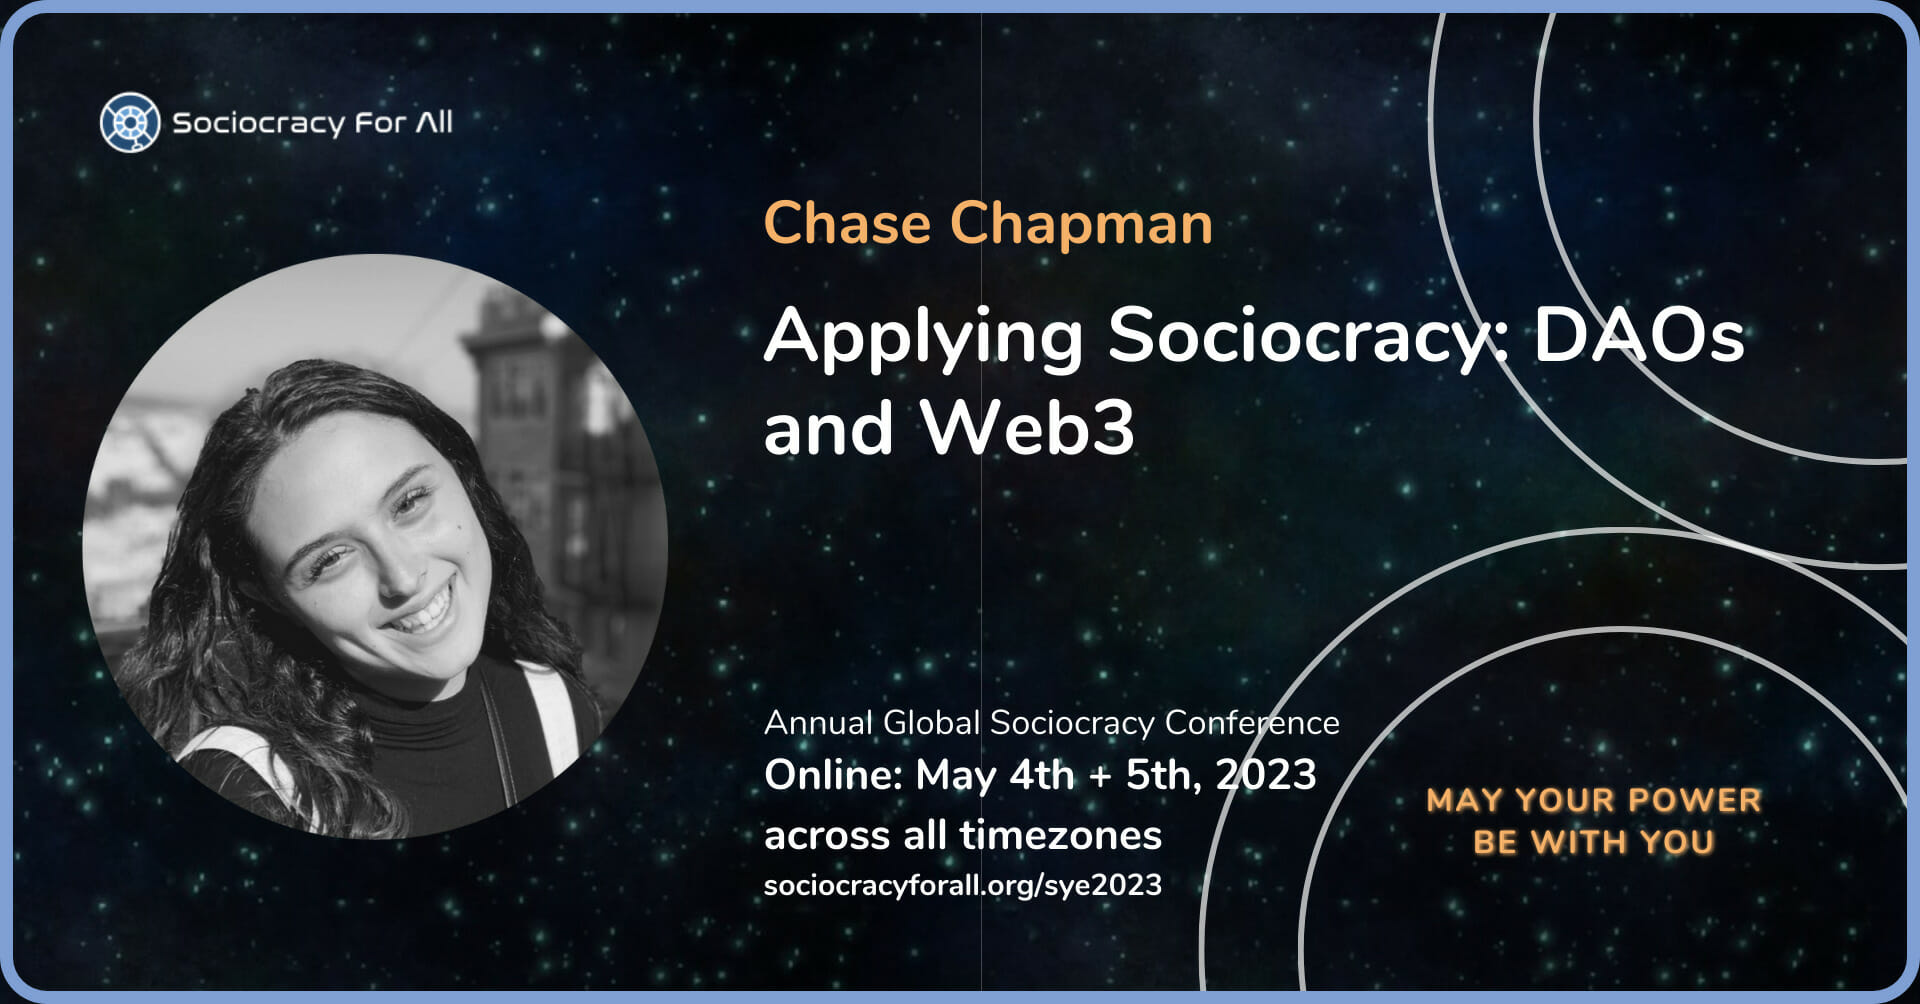 Applying Sociocracy DAOs and Web3